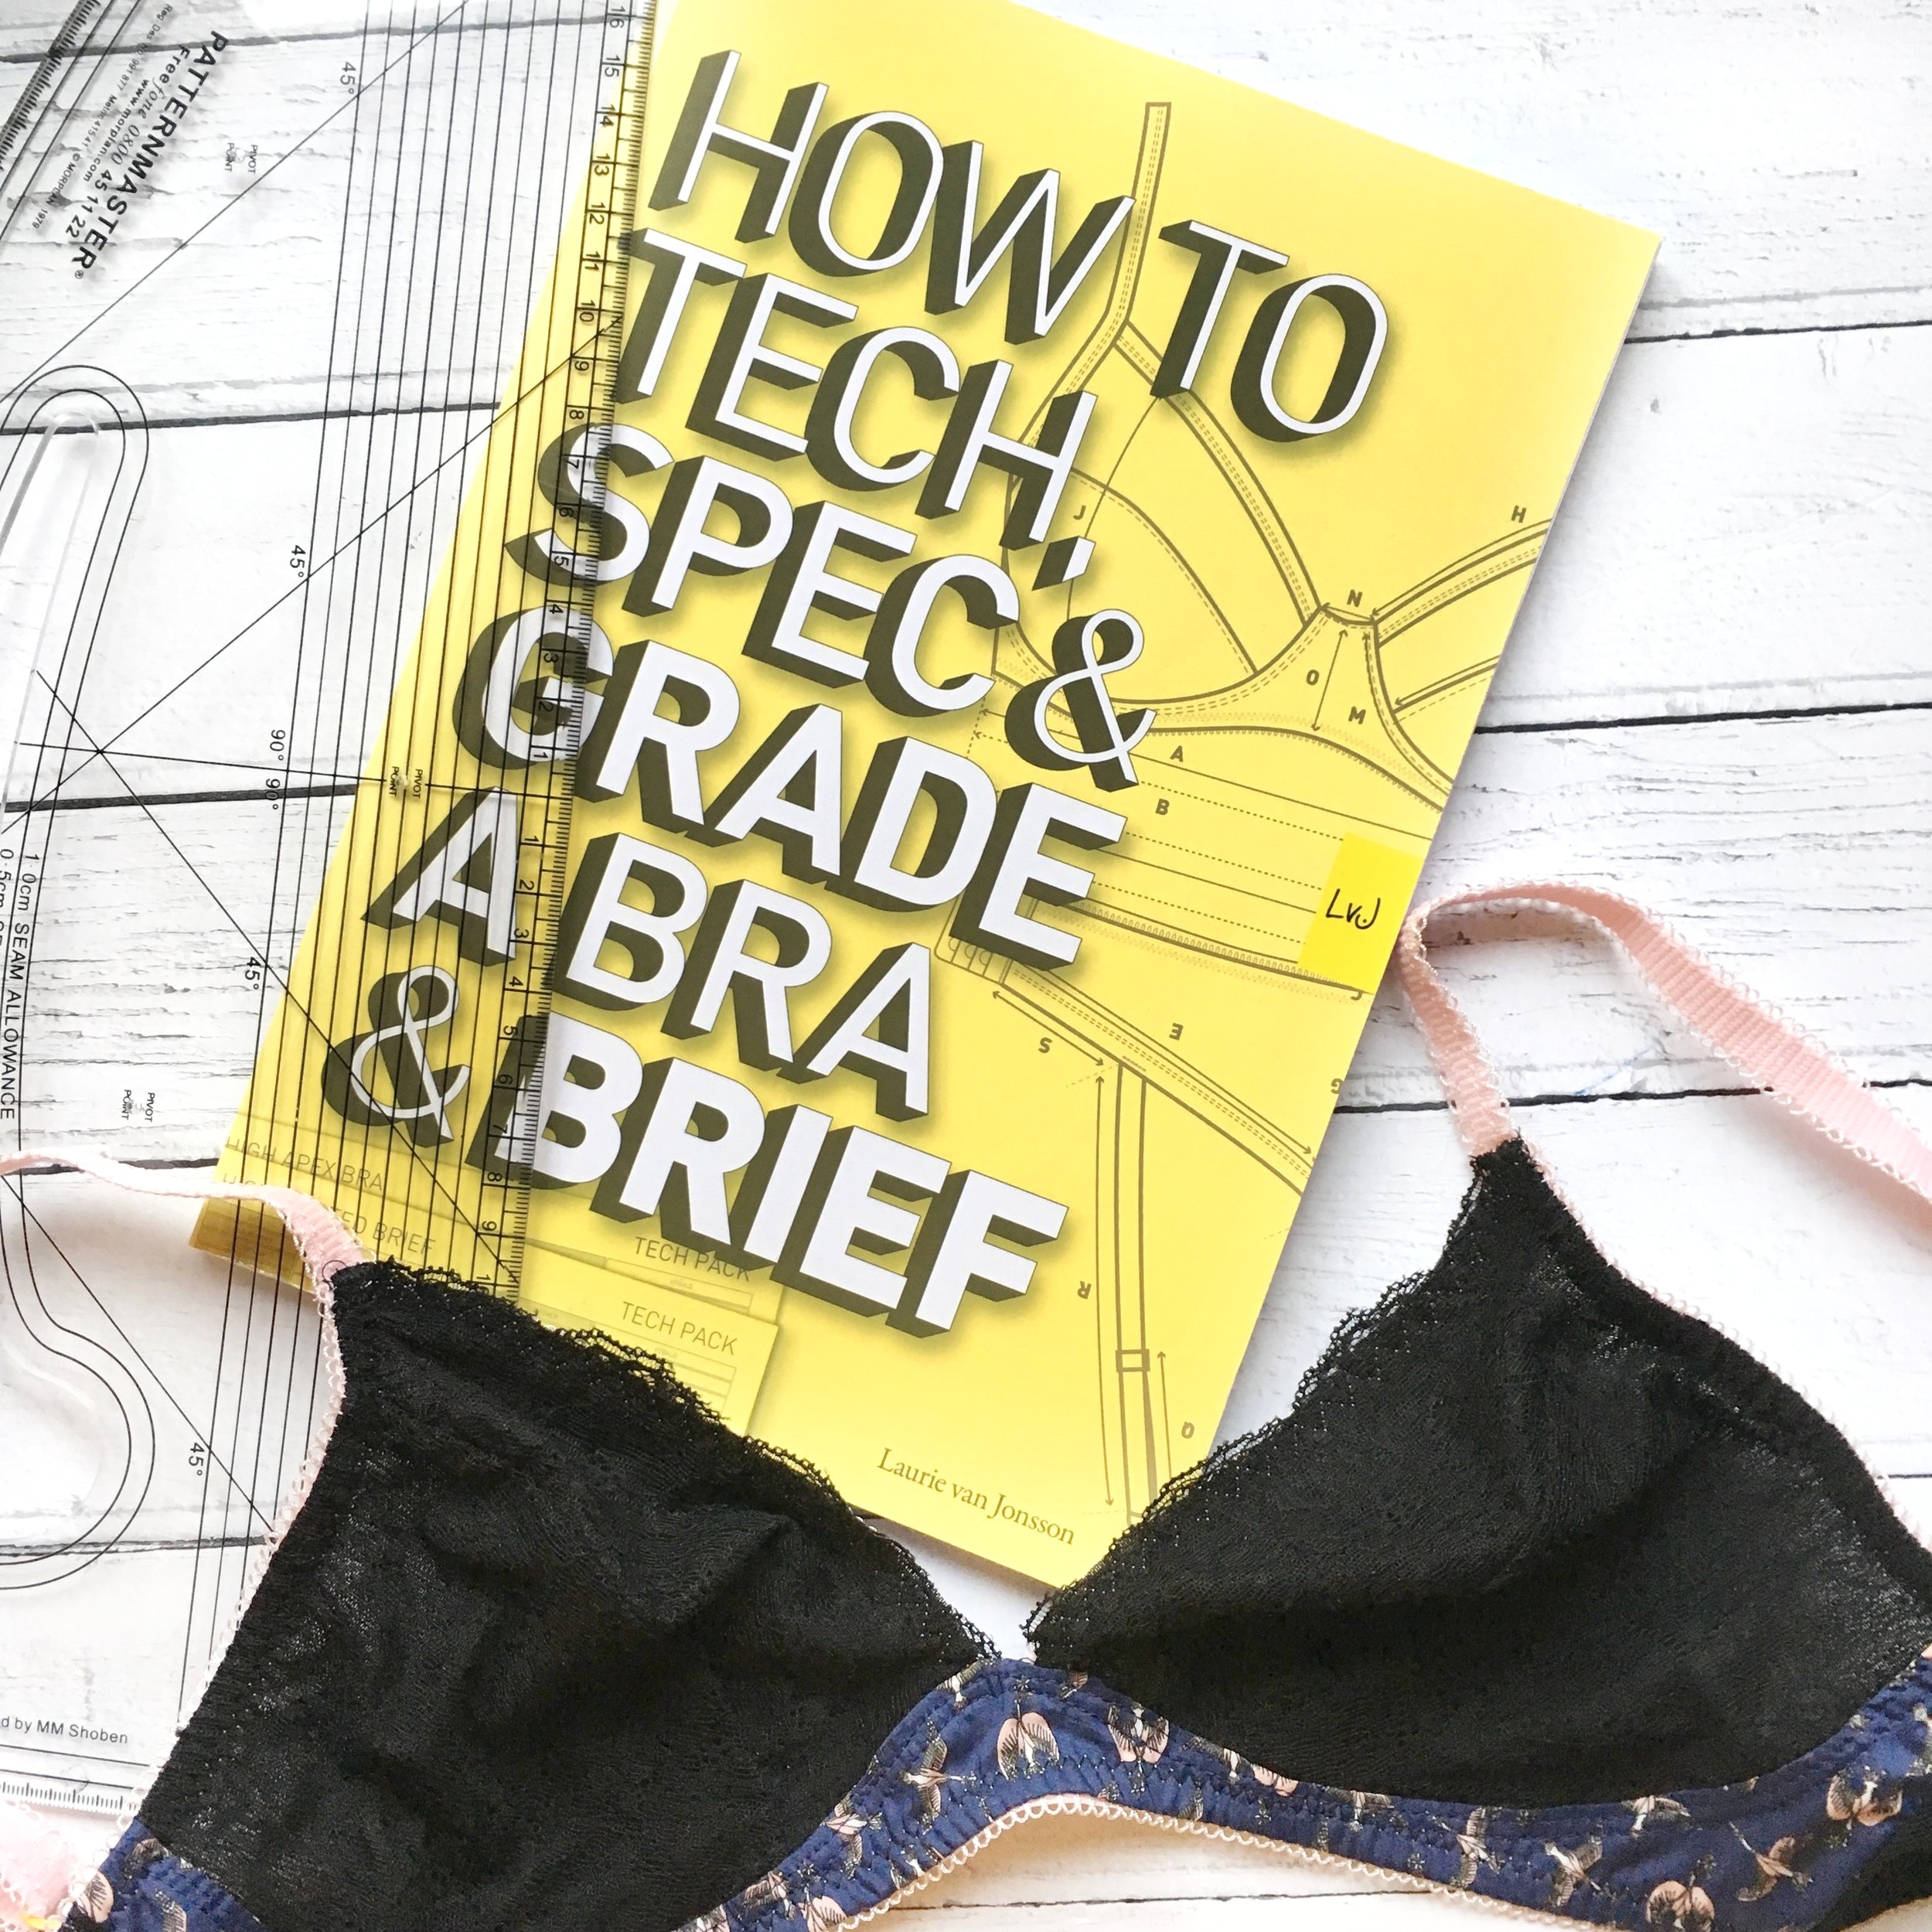 How Spec and Grade a bra and brief — Van Jonsson Design